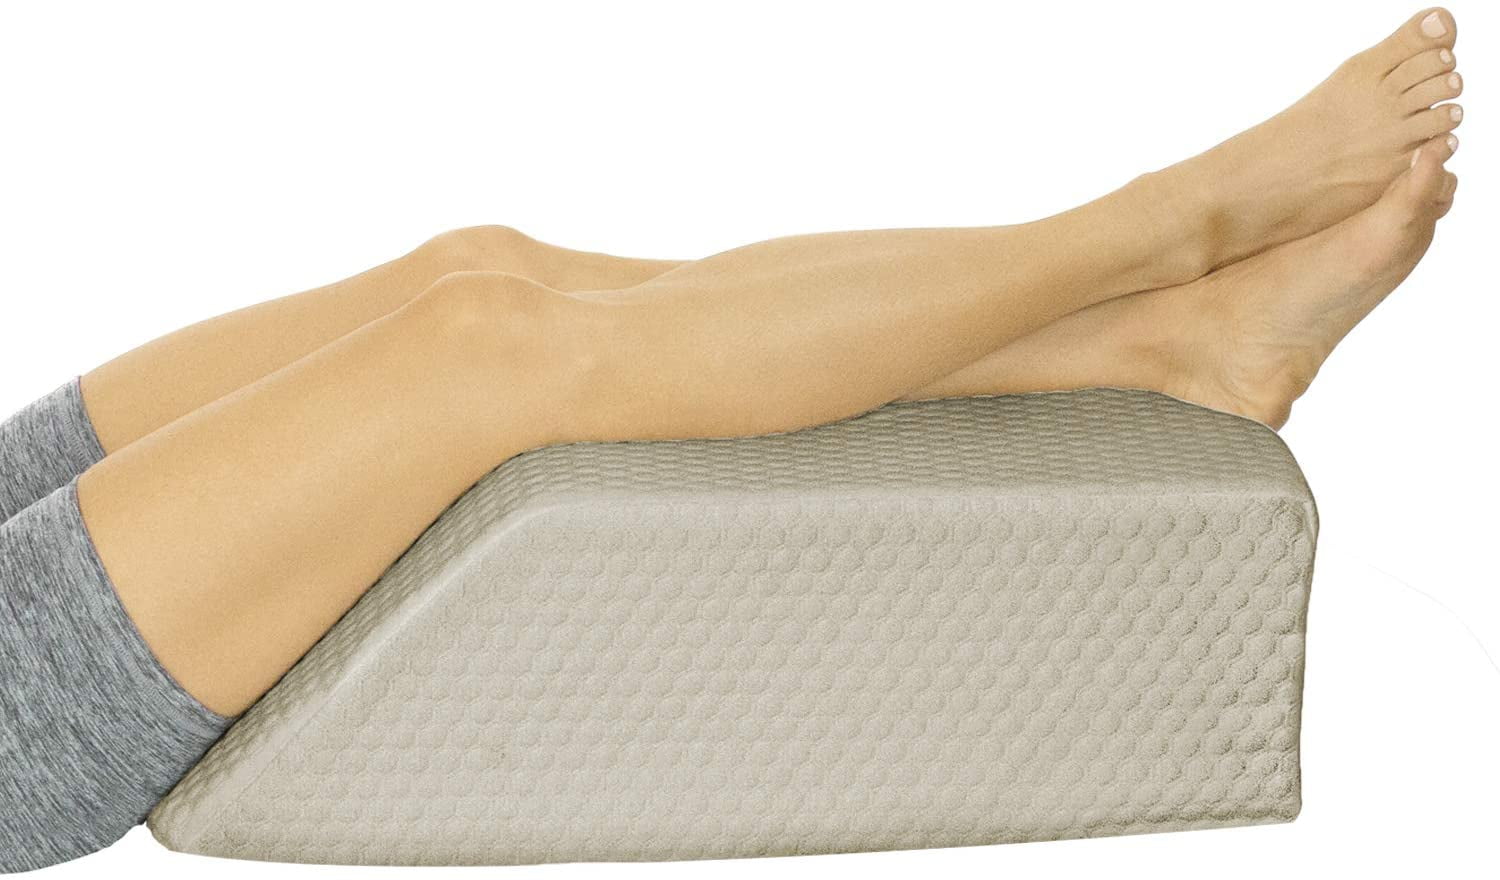 Leg Elevation Wedge Elevator Ortho Pillow Rest Improve Circulation Back Pain 